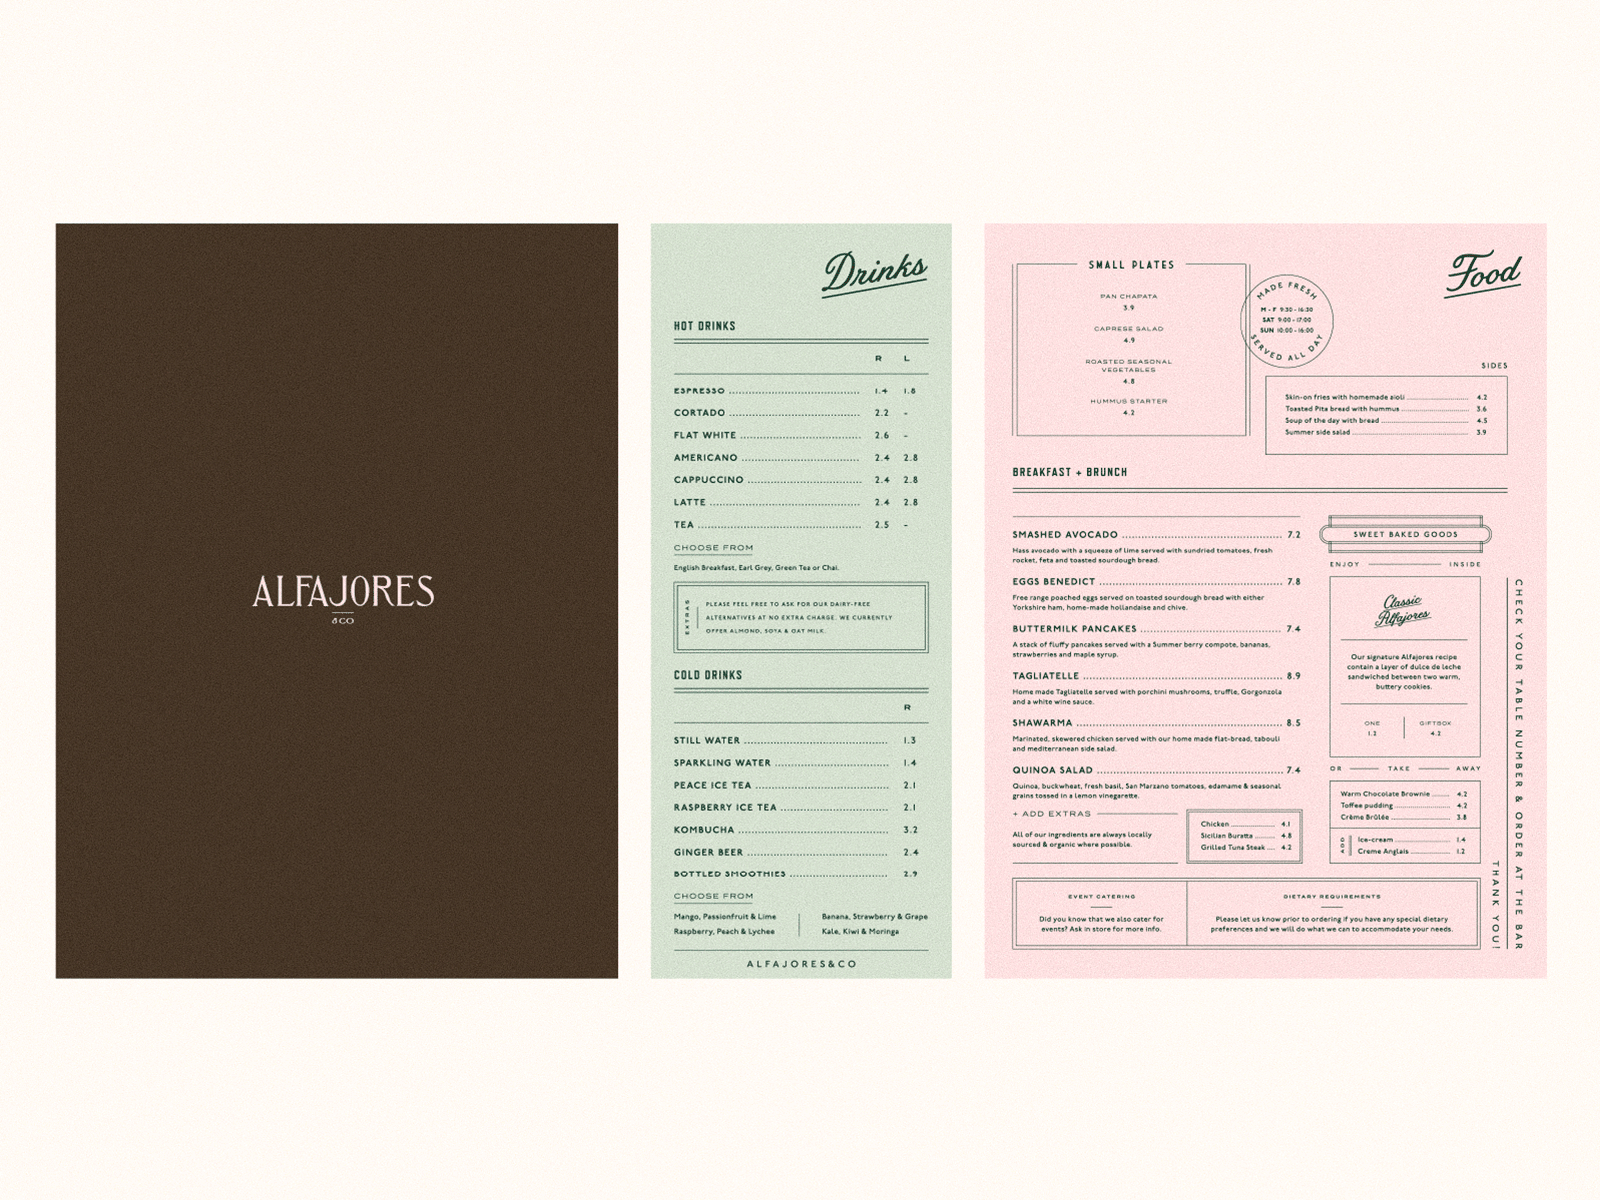 Alfajores & Co. menu design